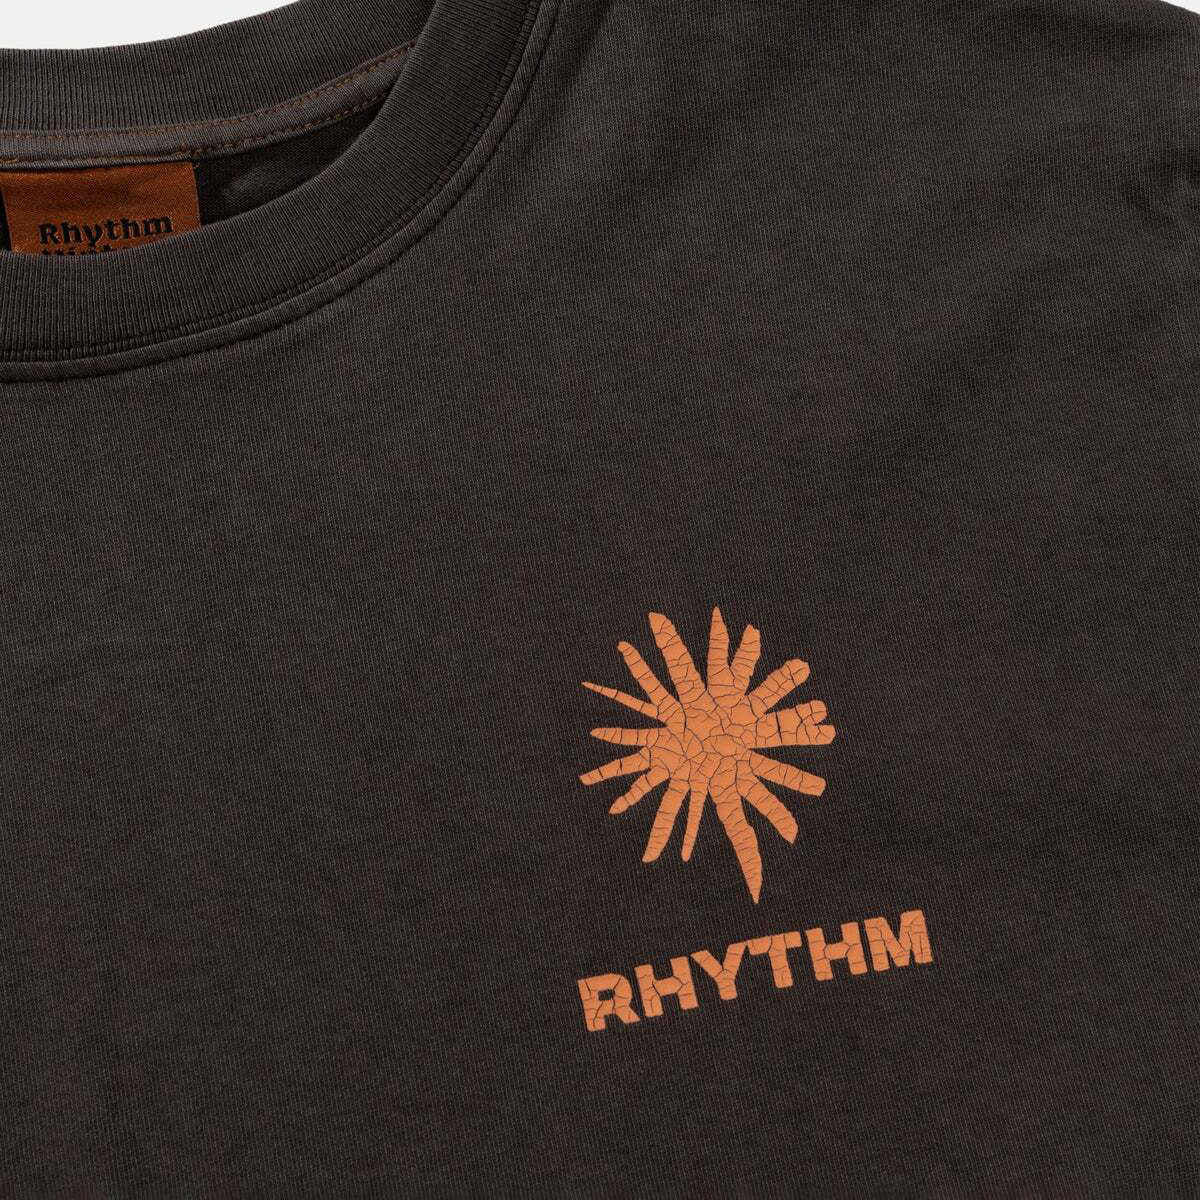 Rhythm Vintage Black Zone SS T-Shirt